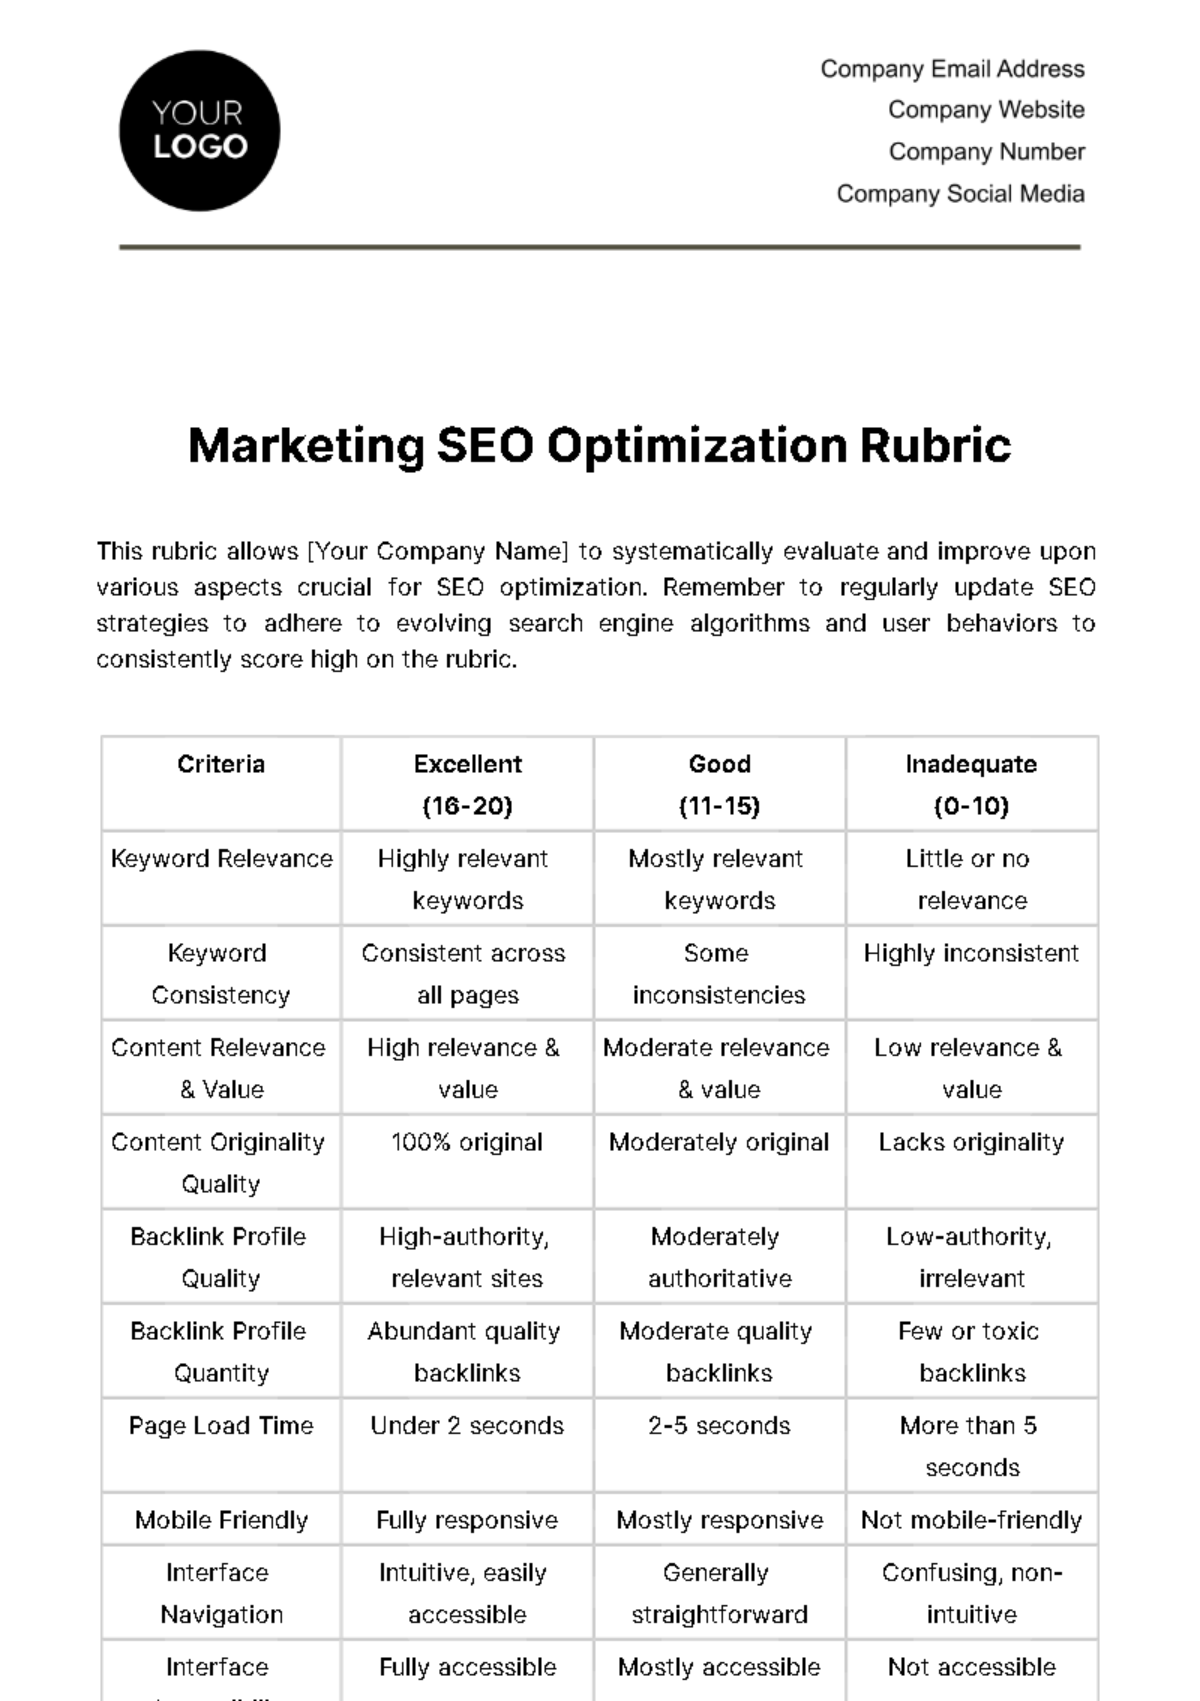 Free Marketing SEO Optimization Rubric Template